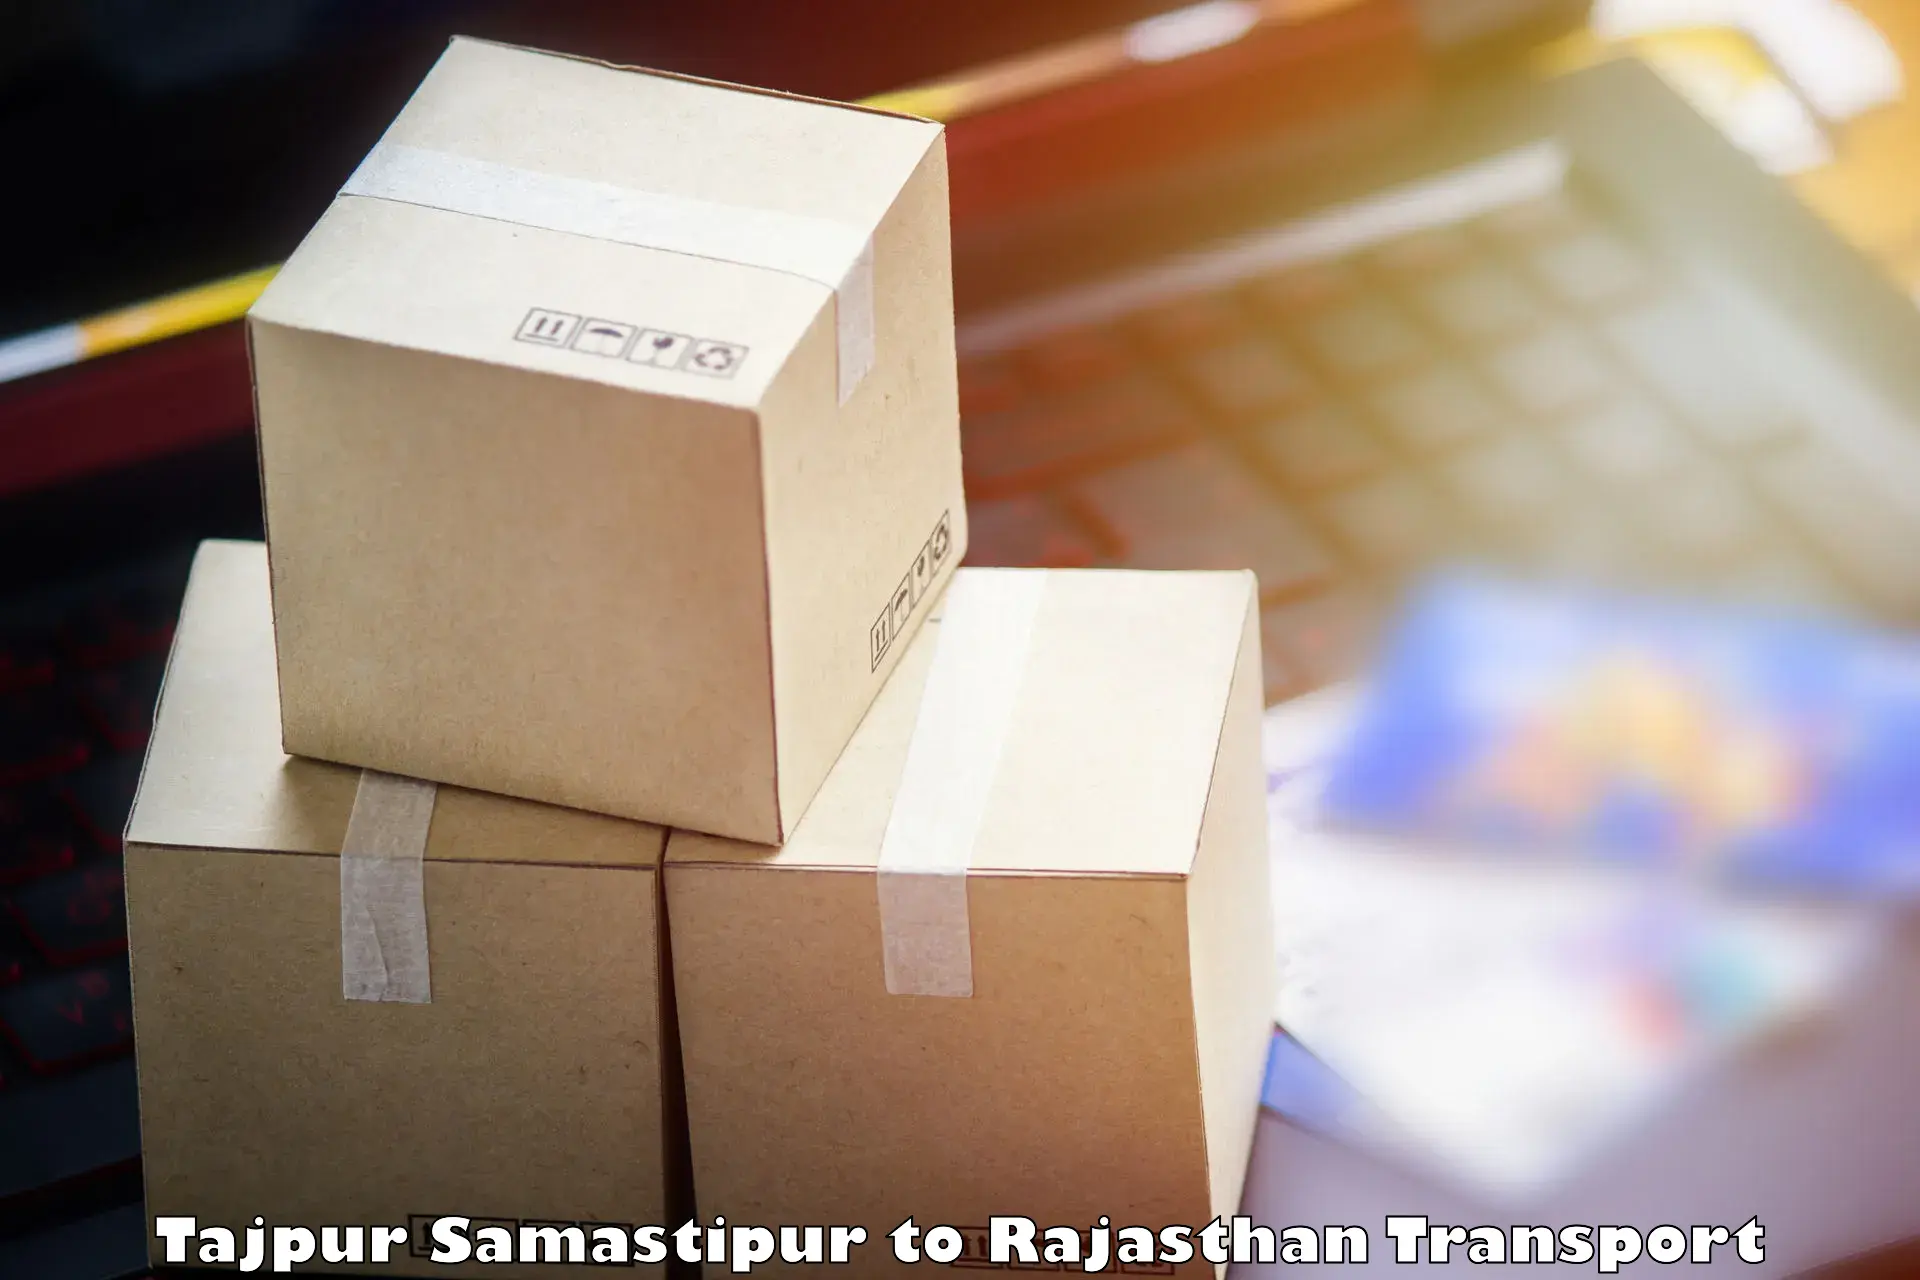 Furniture transport service Tajpur Samastipur to Rajasthan